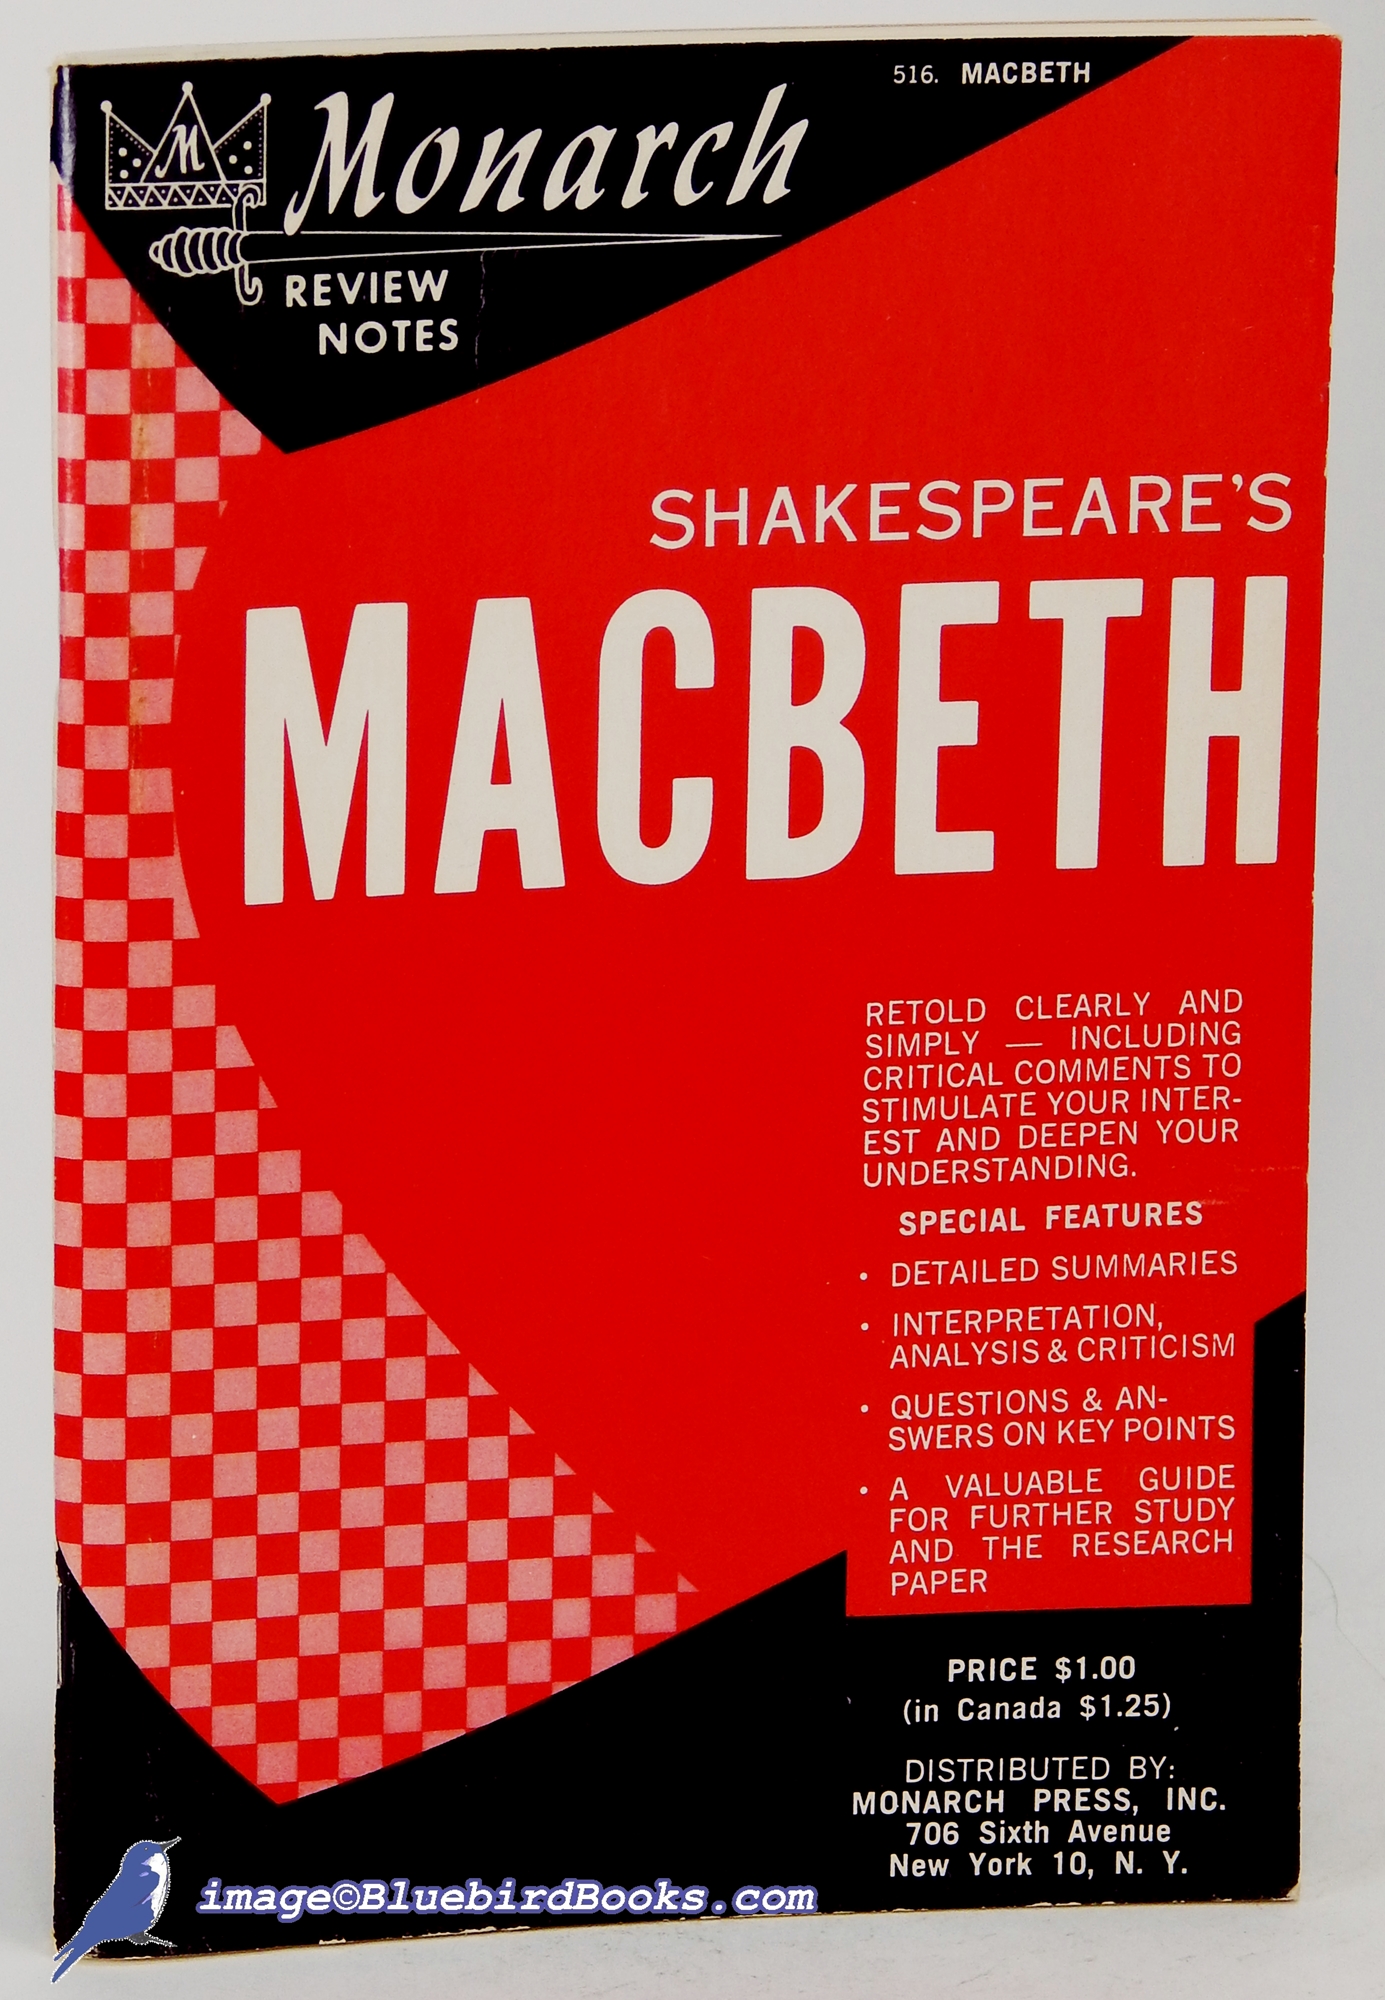 Shakespeare on Politics in Macbeth